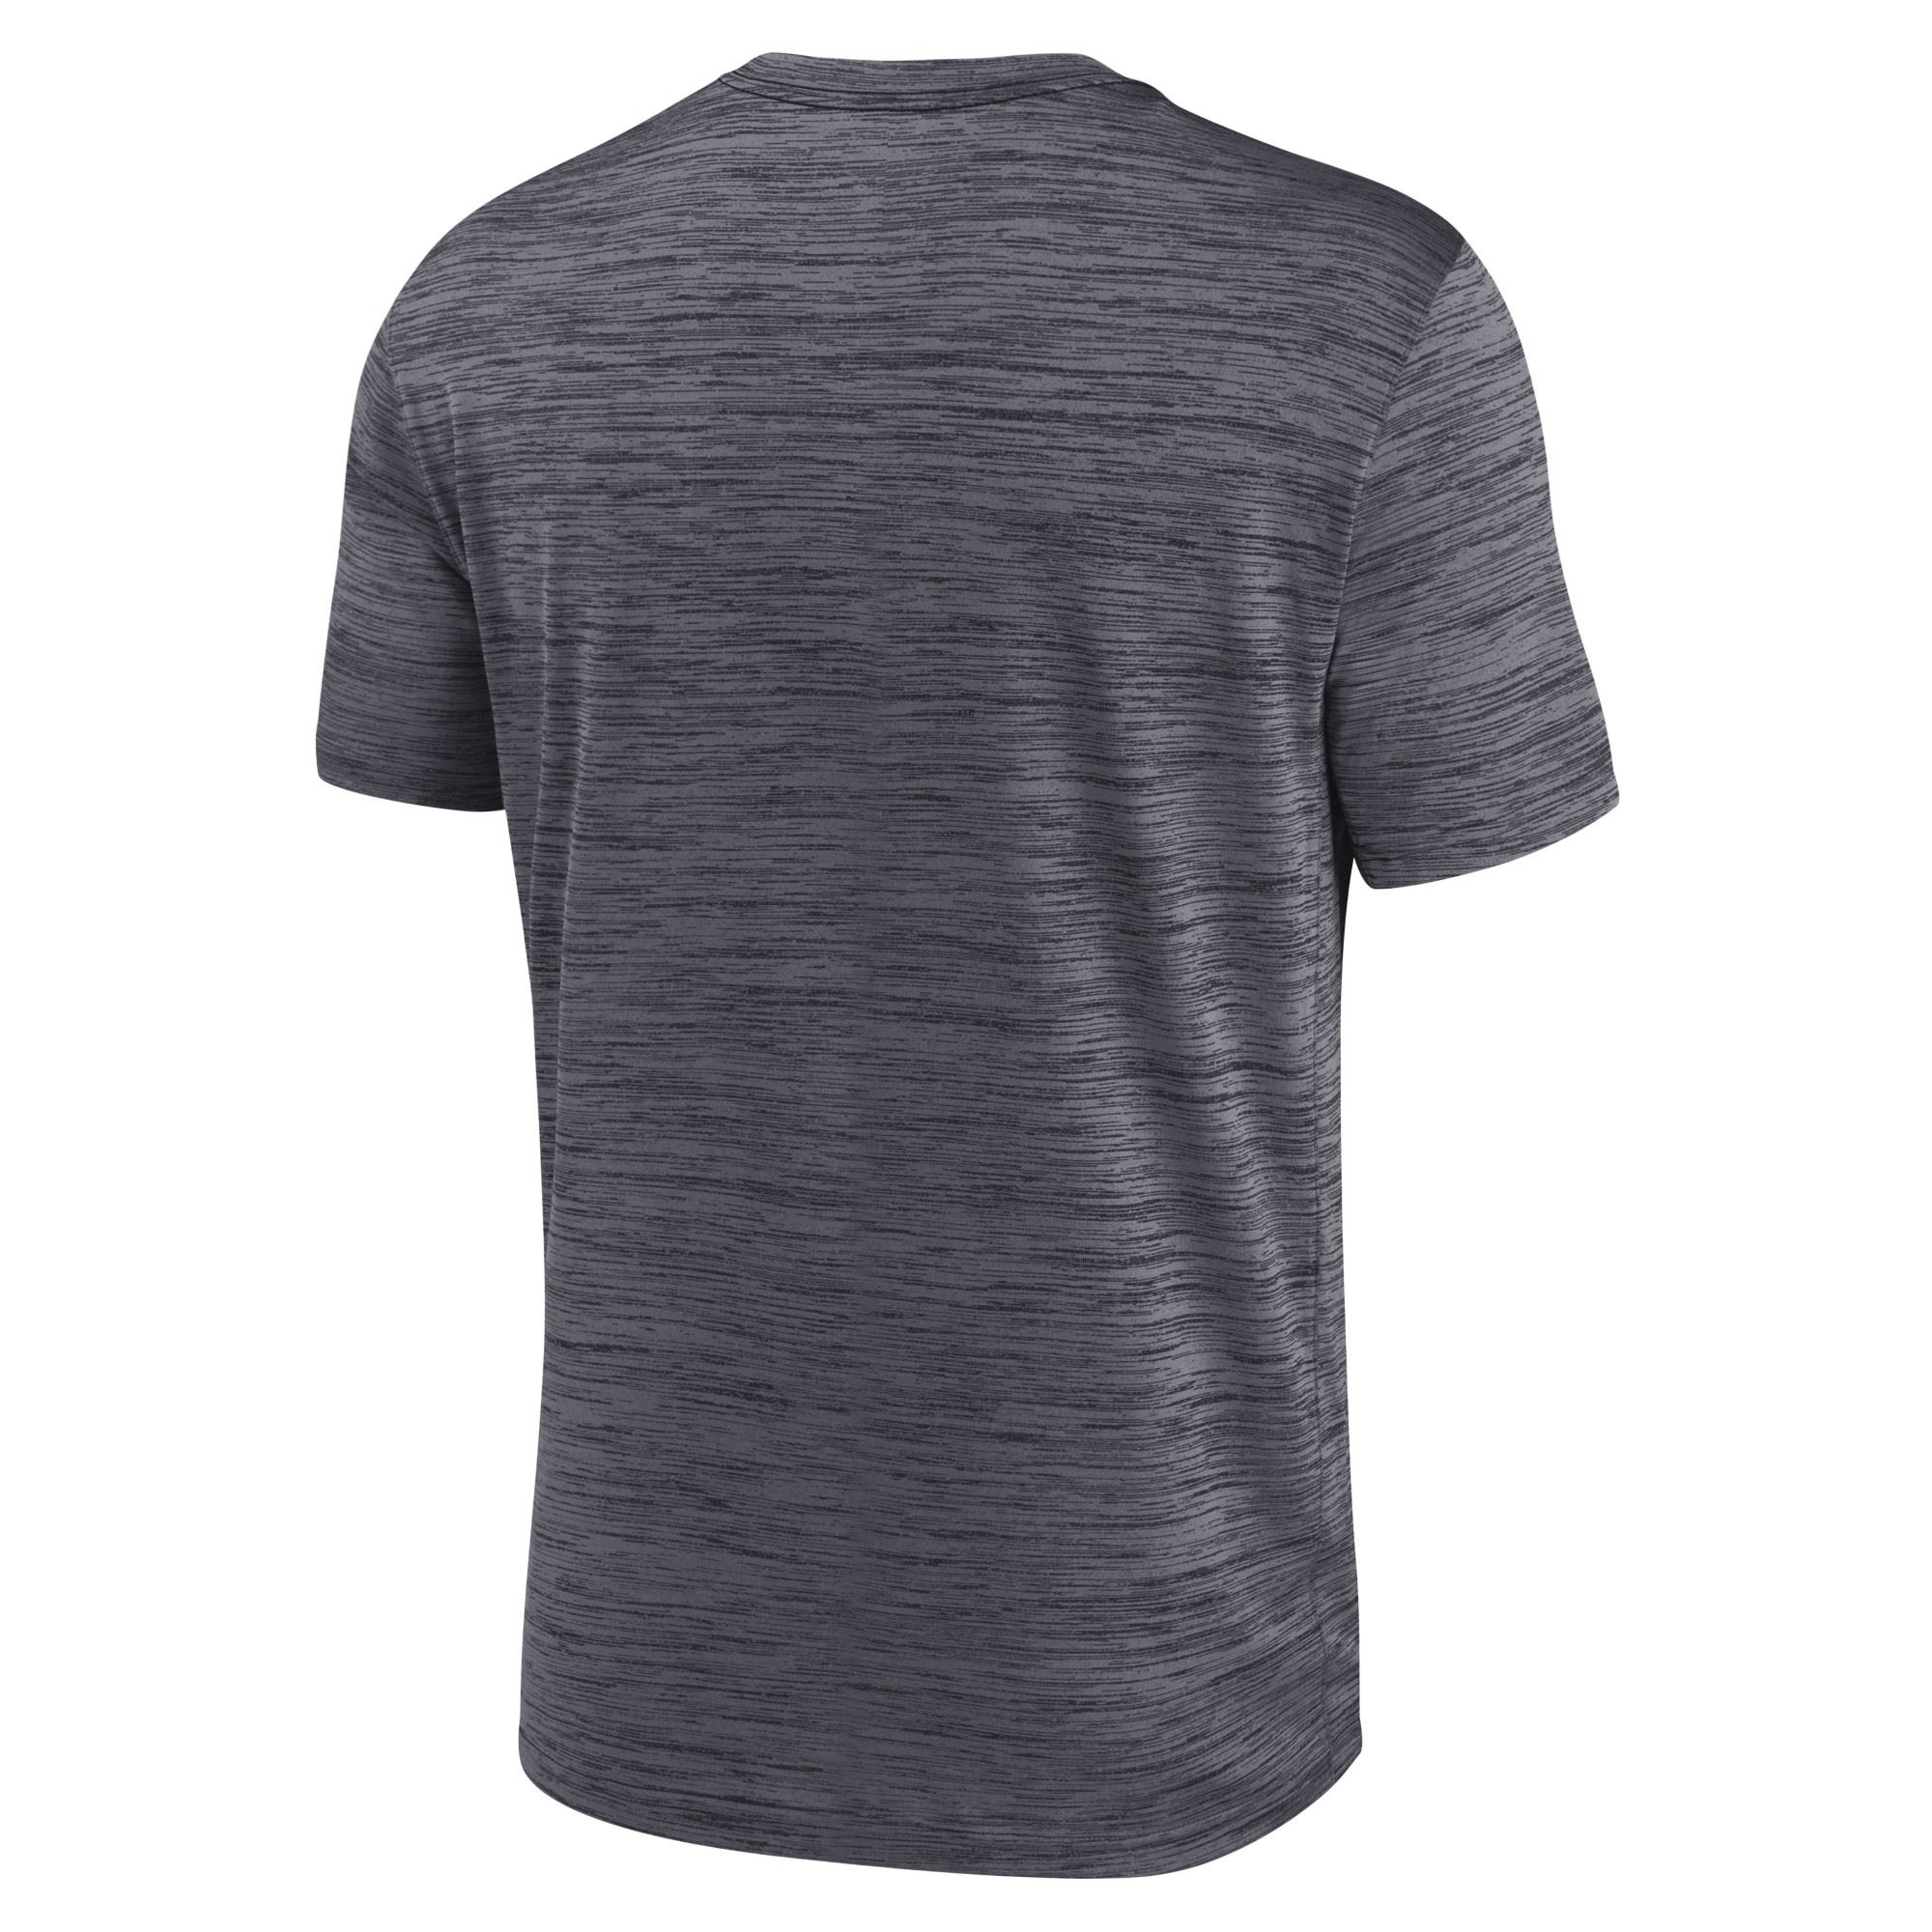 Las Vegas Raiders Gray NFL Velocity Arch T-Shirt Nike 